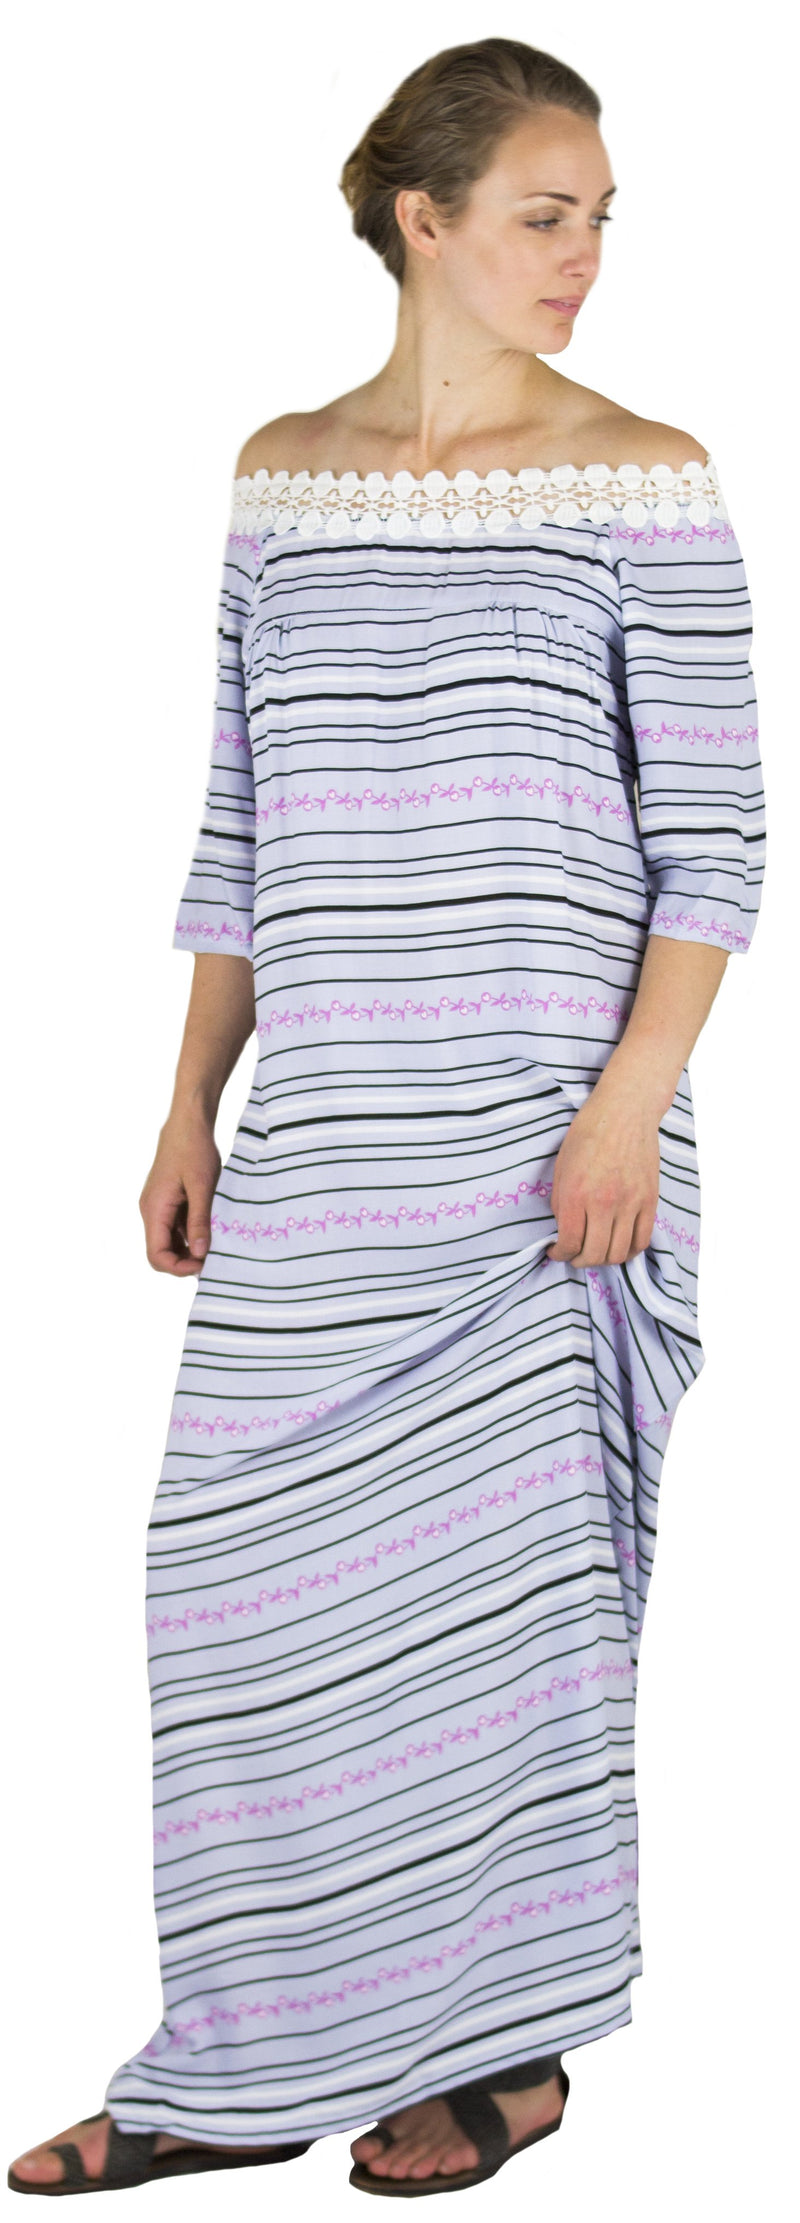 Sakkas Maha Soft Womens Short Sleeve Nightgown Sleep Dress Breathable No Bunch Up